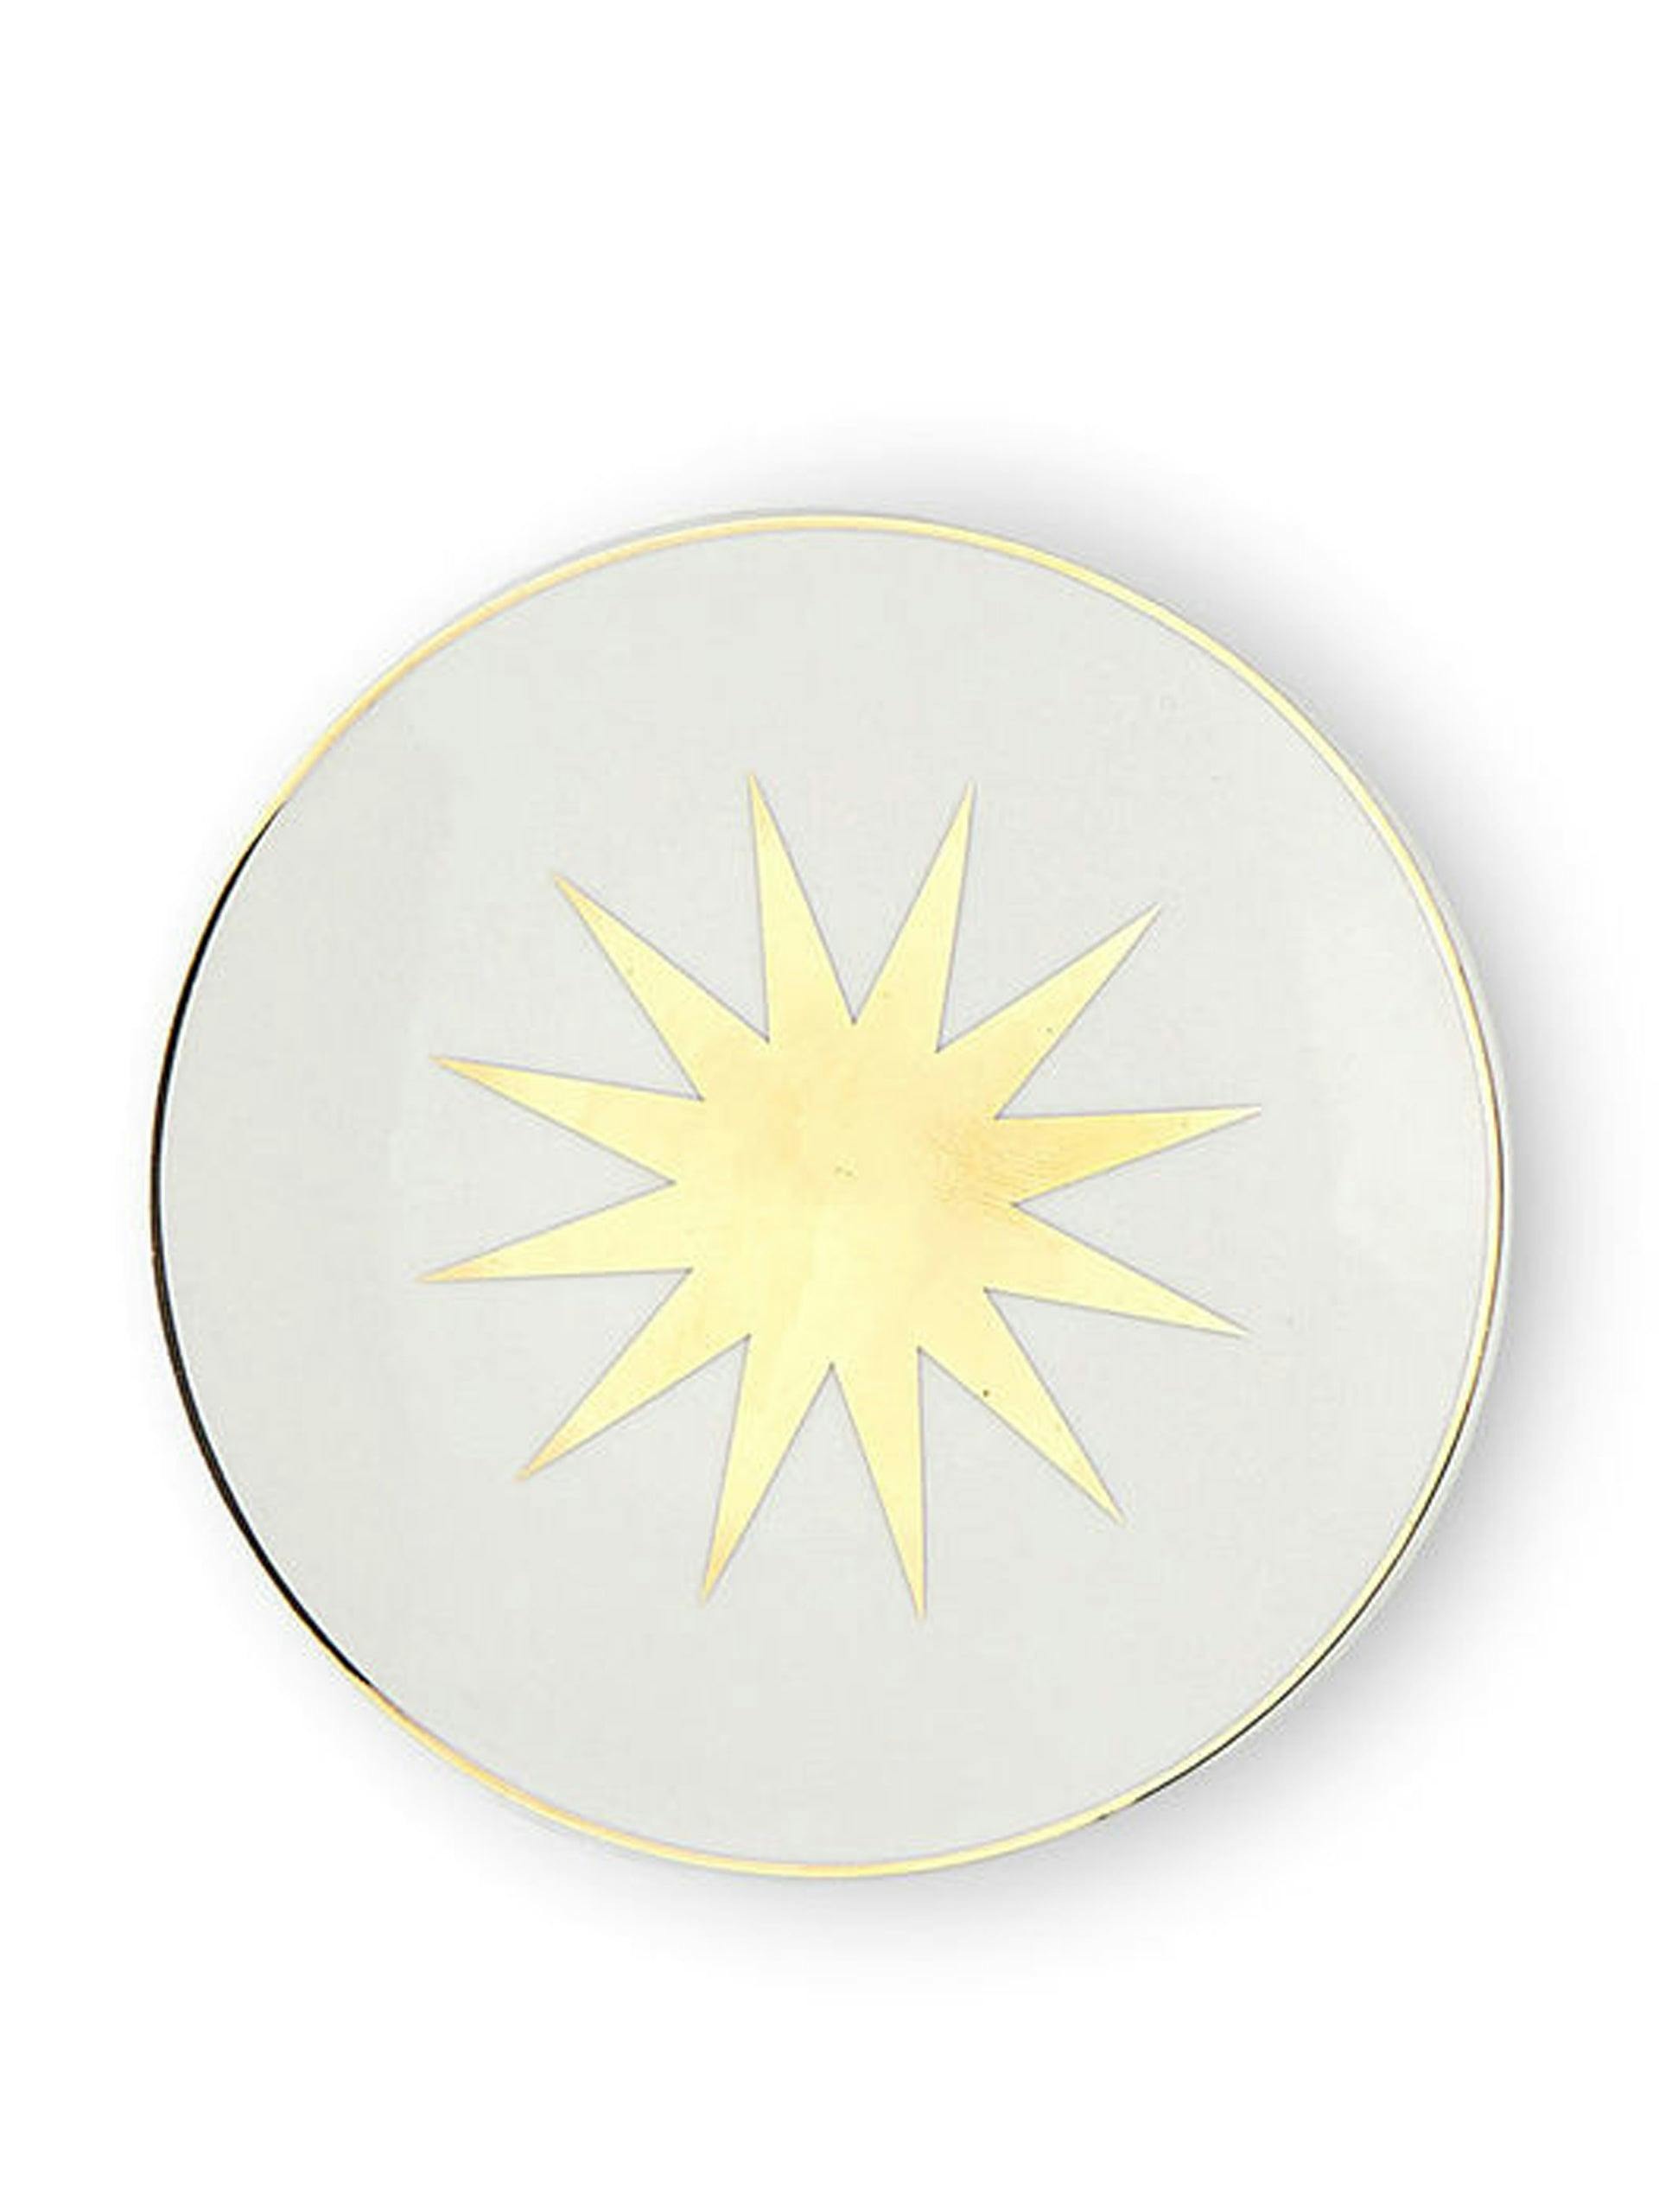 Gold ceramic side plate